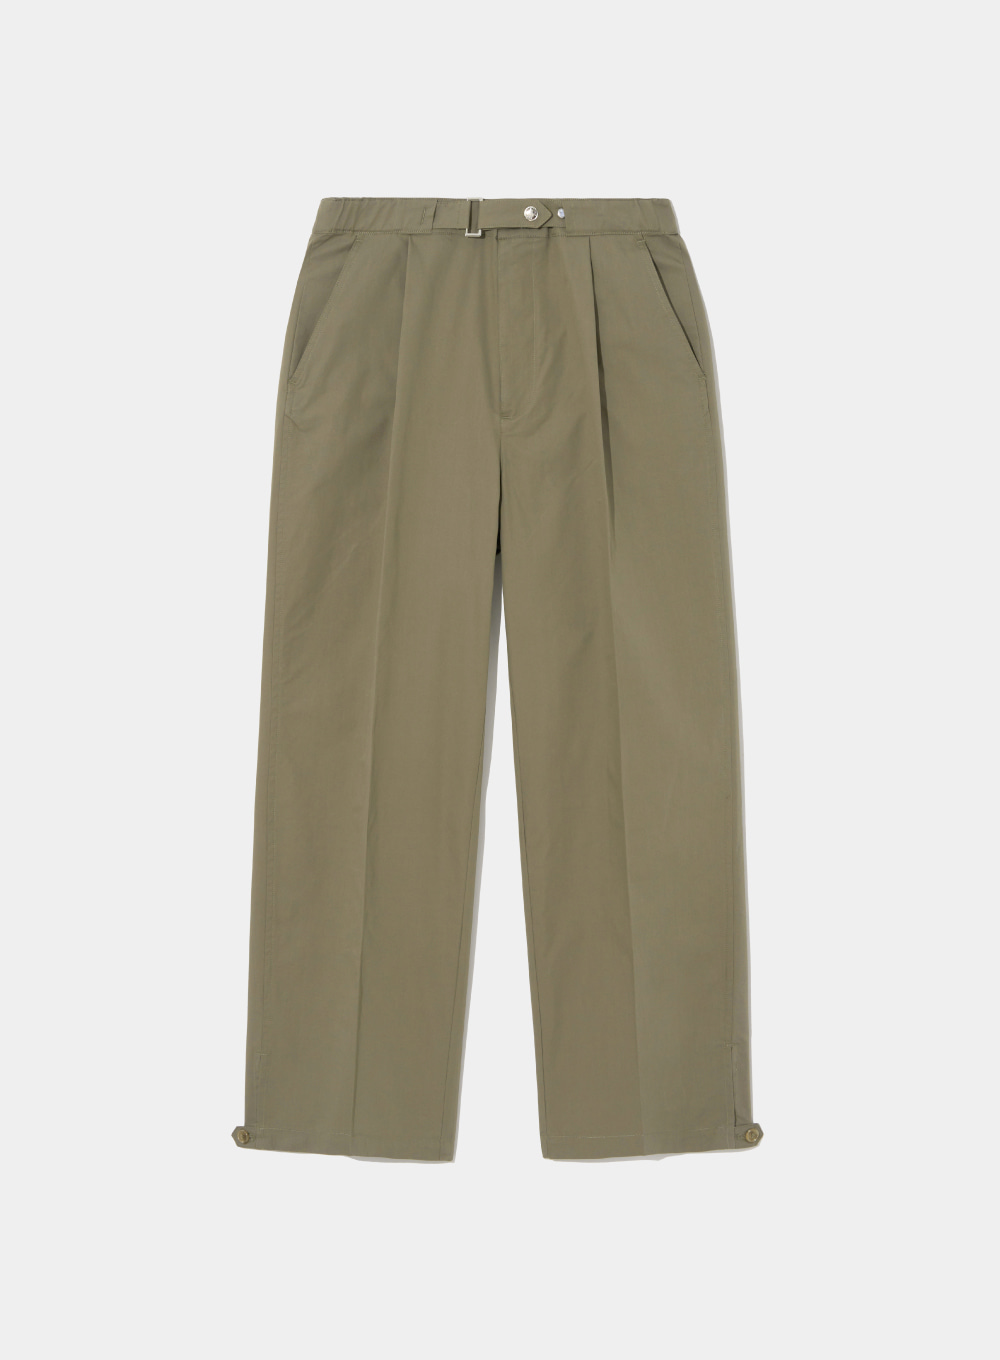 Hague Belted Banding Pants - Khaki Brown